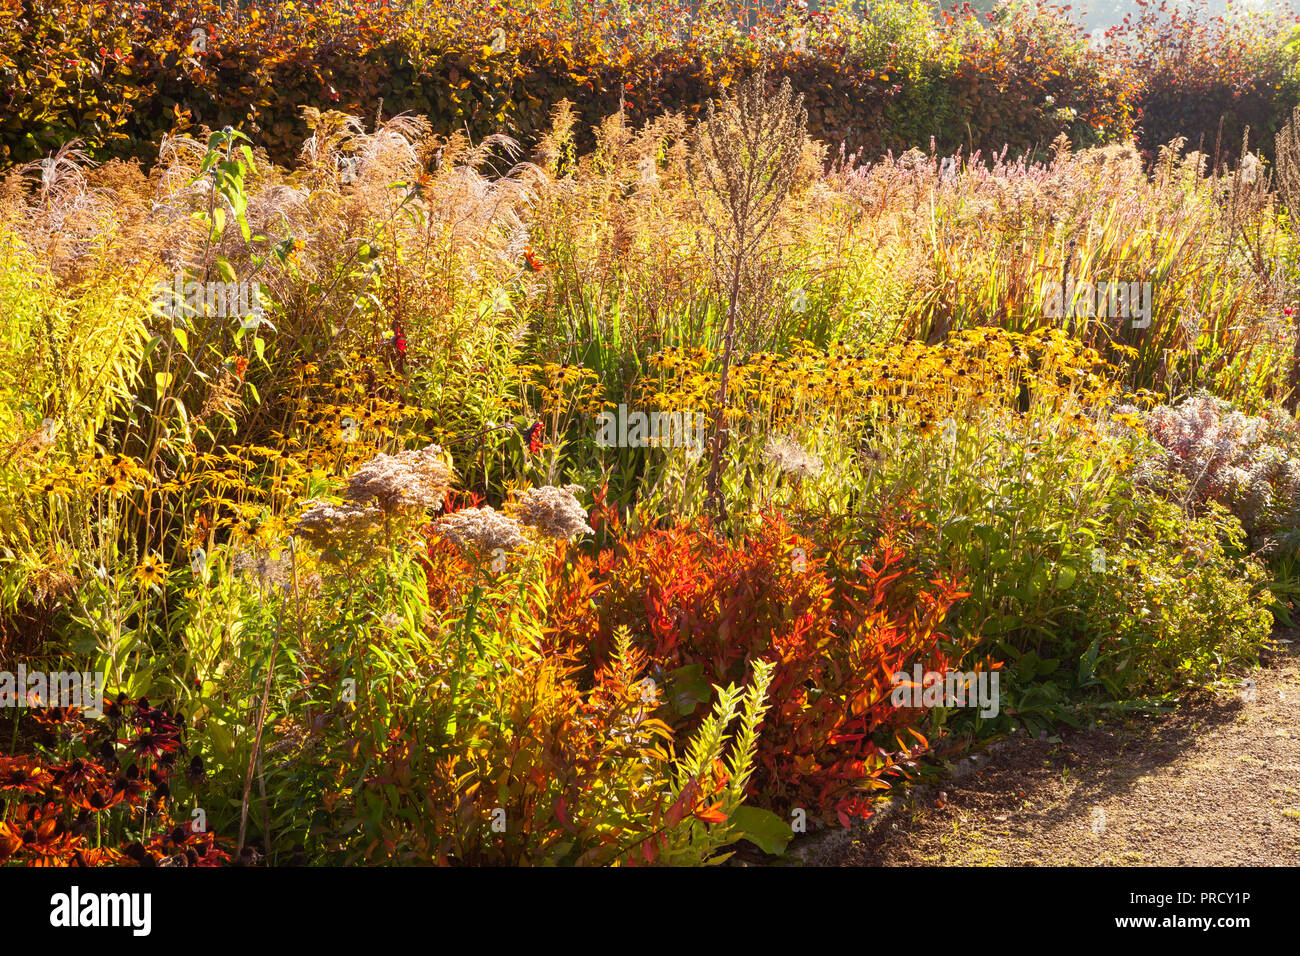 Helmsley Walled Garden, Helmsley, North Yorkshire, UK. Autumn, September 2018. Stock Photo